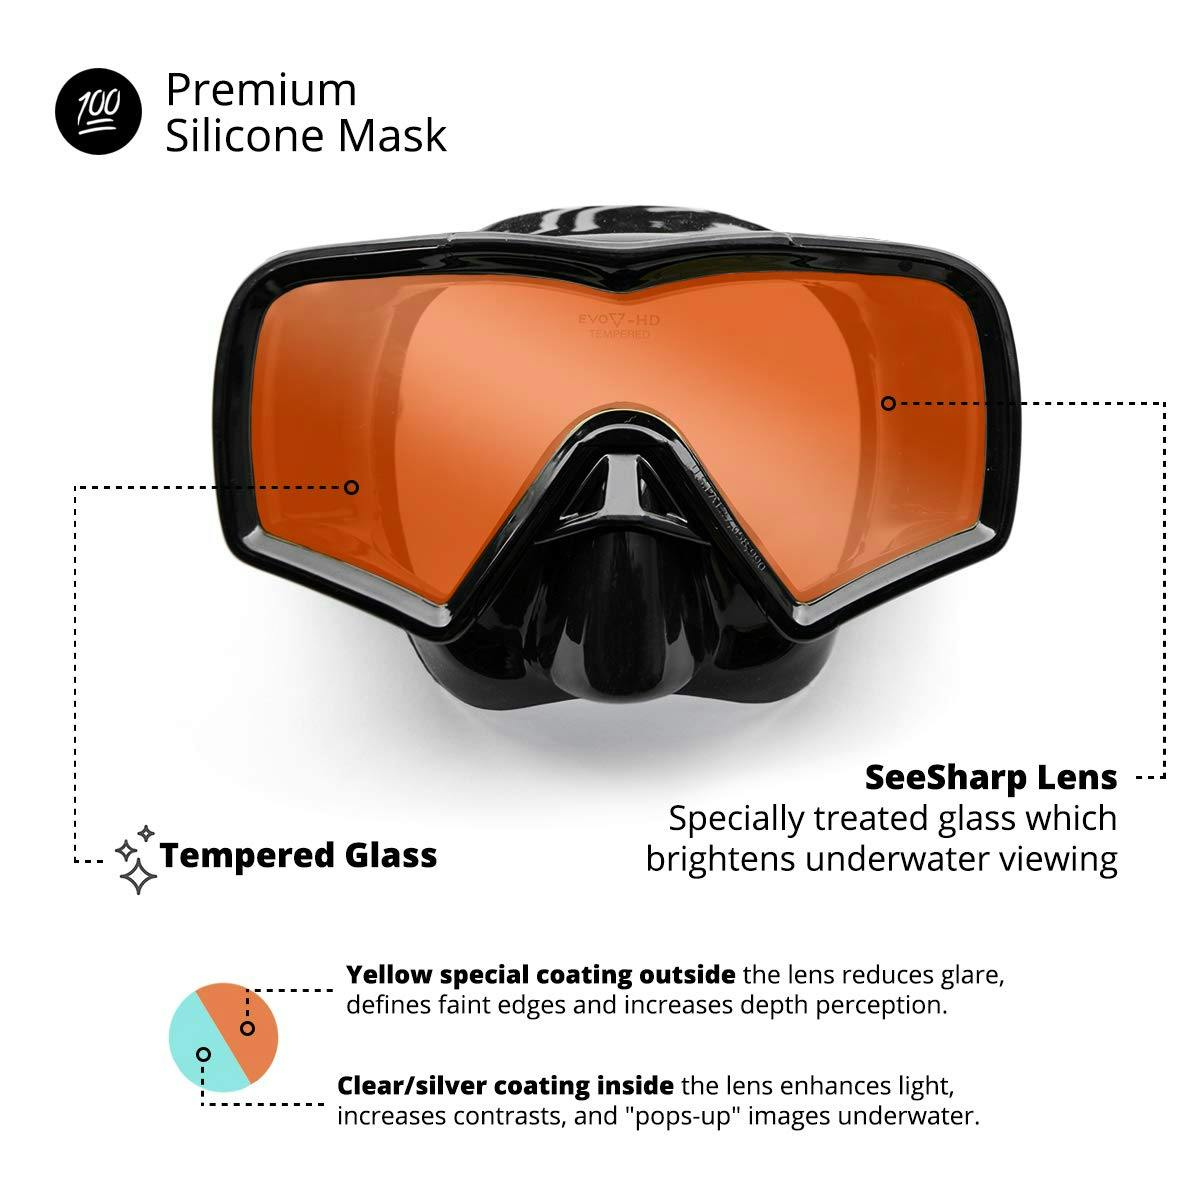 EVO Hi Definition Snorkel Combo, Single Lens Mask Infographic